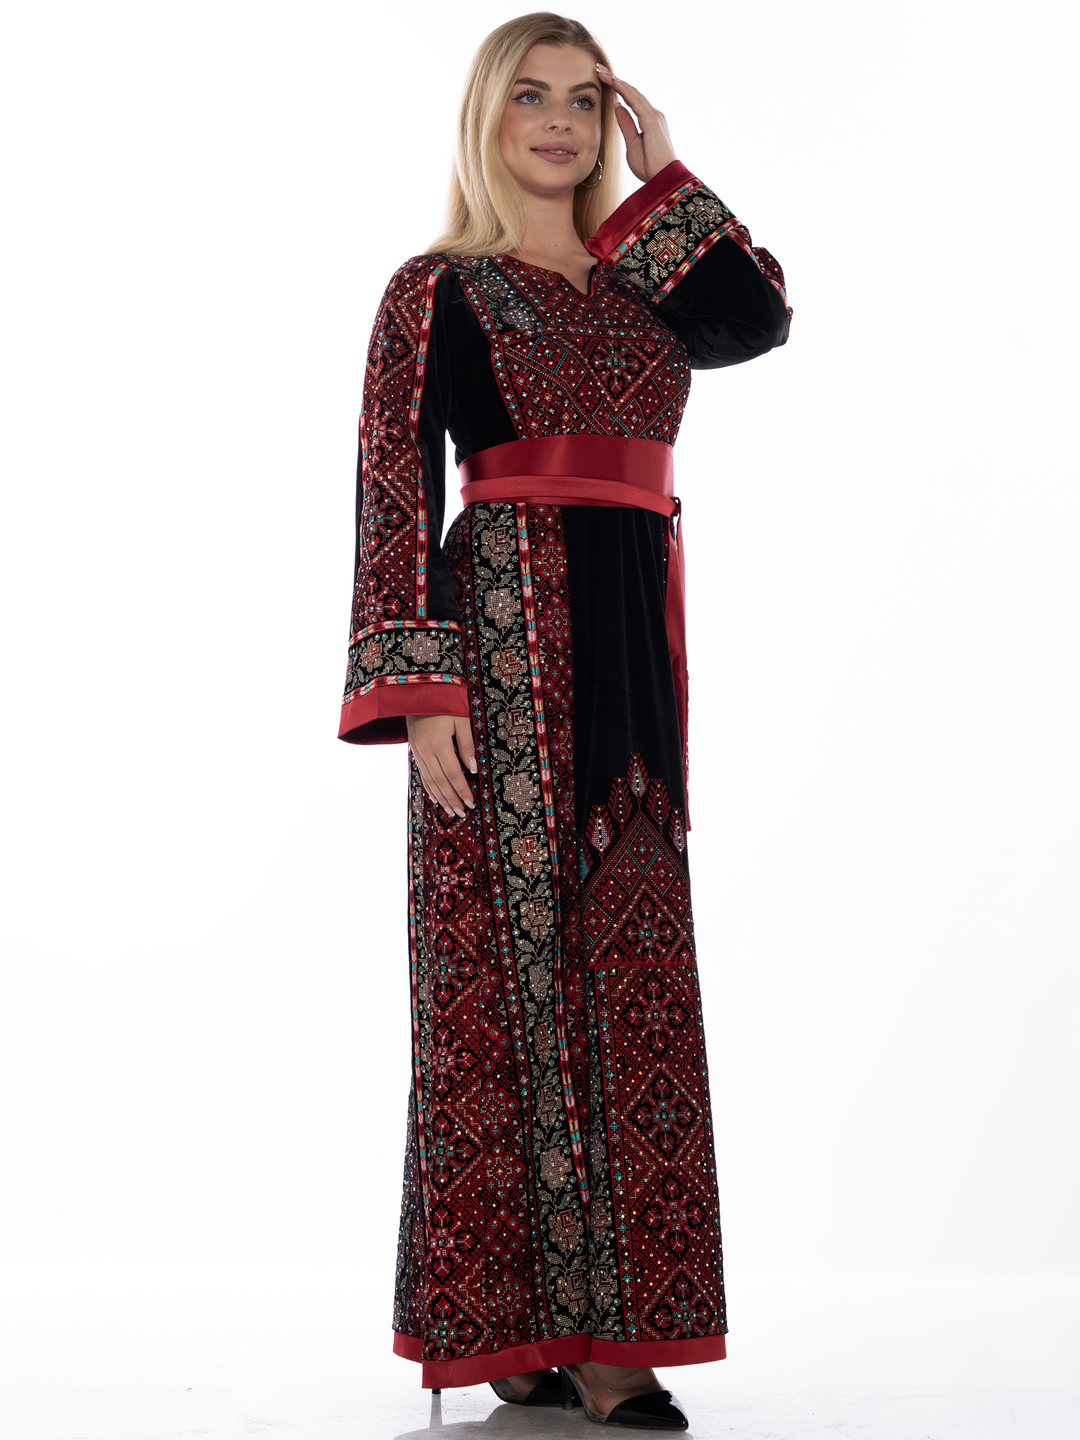 Jenin Velvet Beauty - High Quality Traditional Embroidered Palestinian Thobe